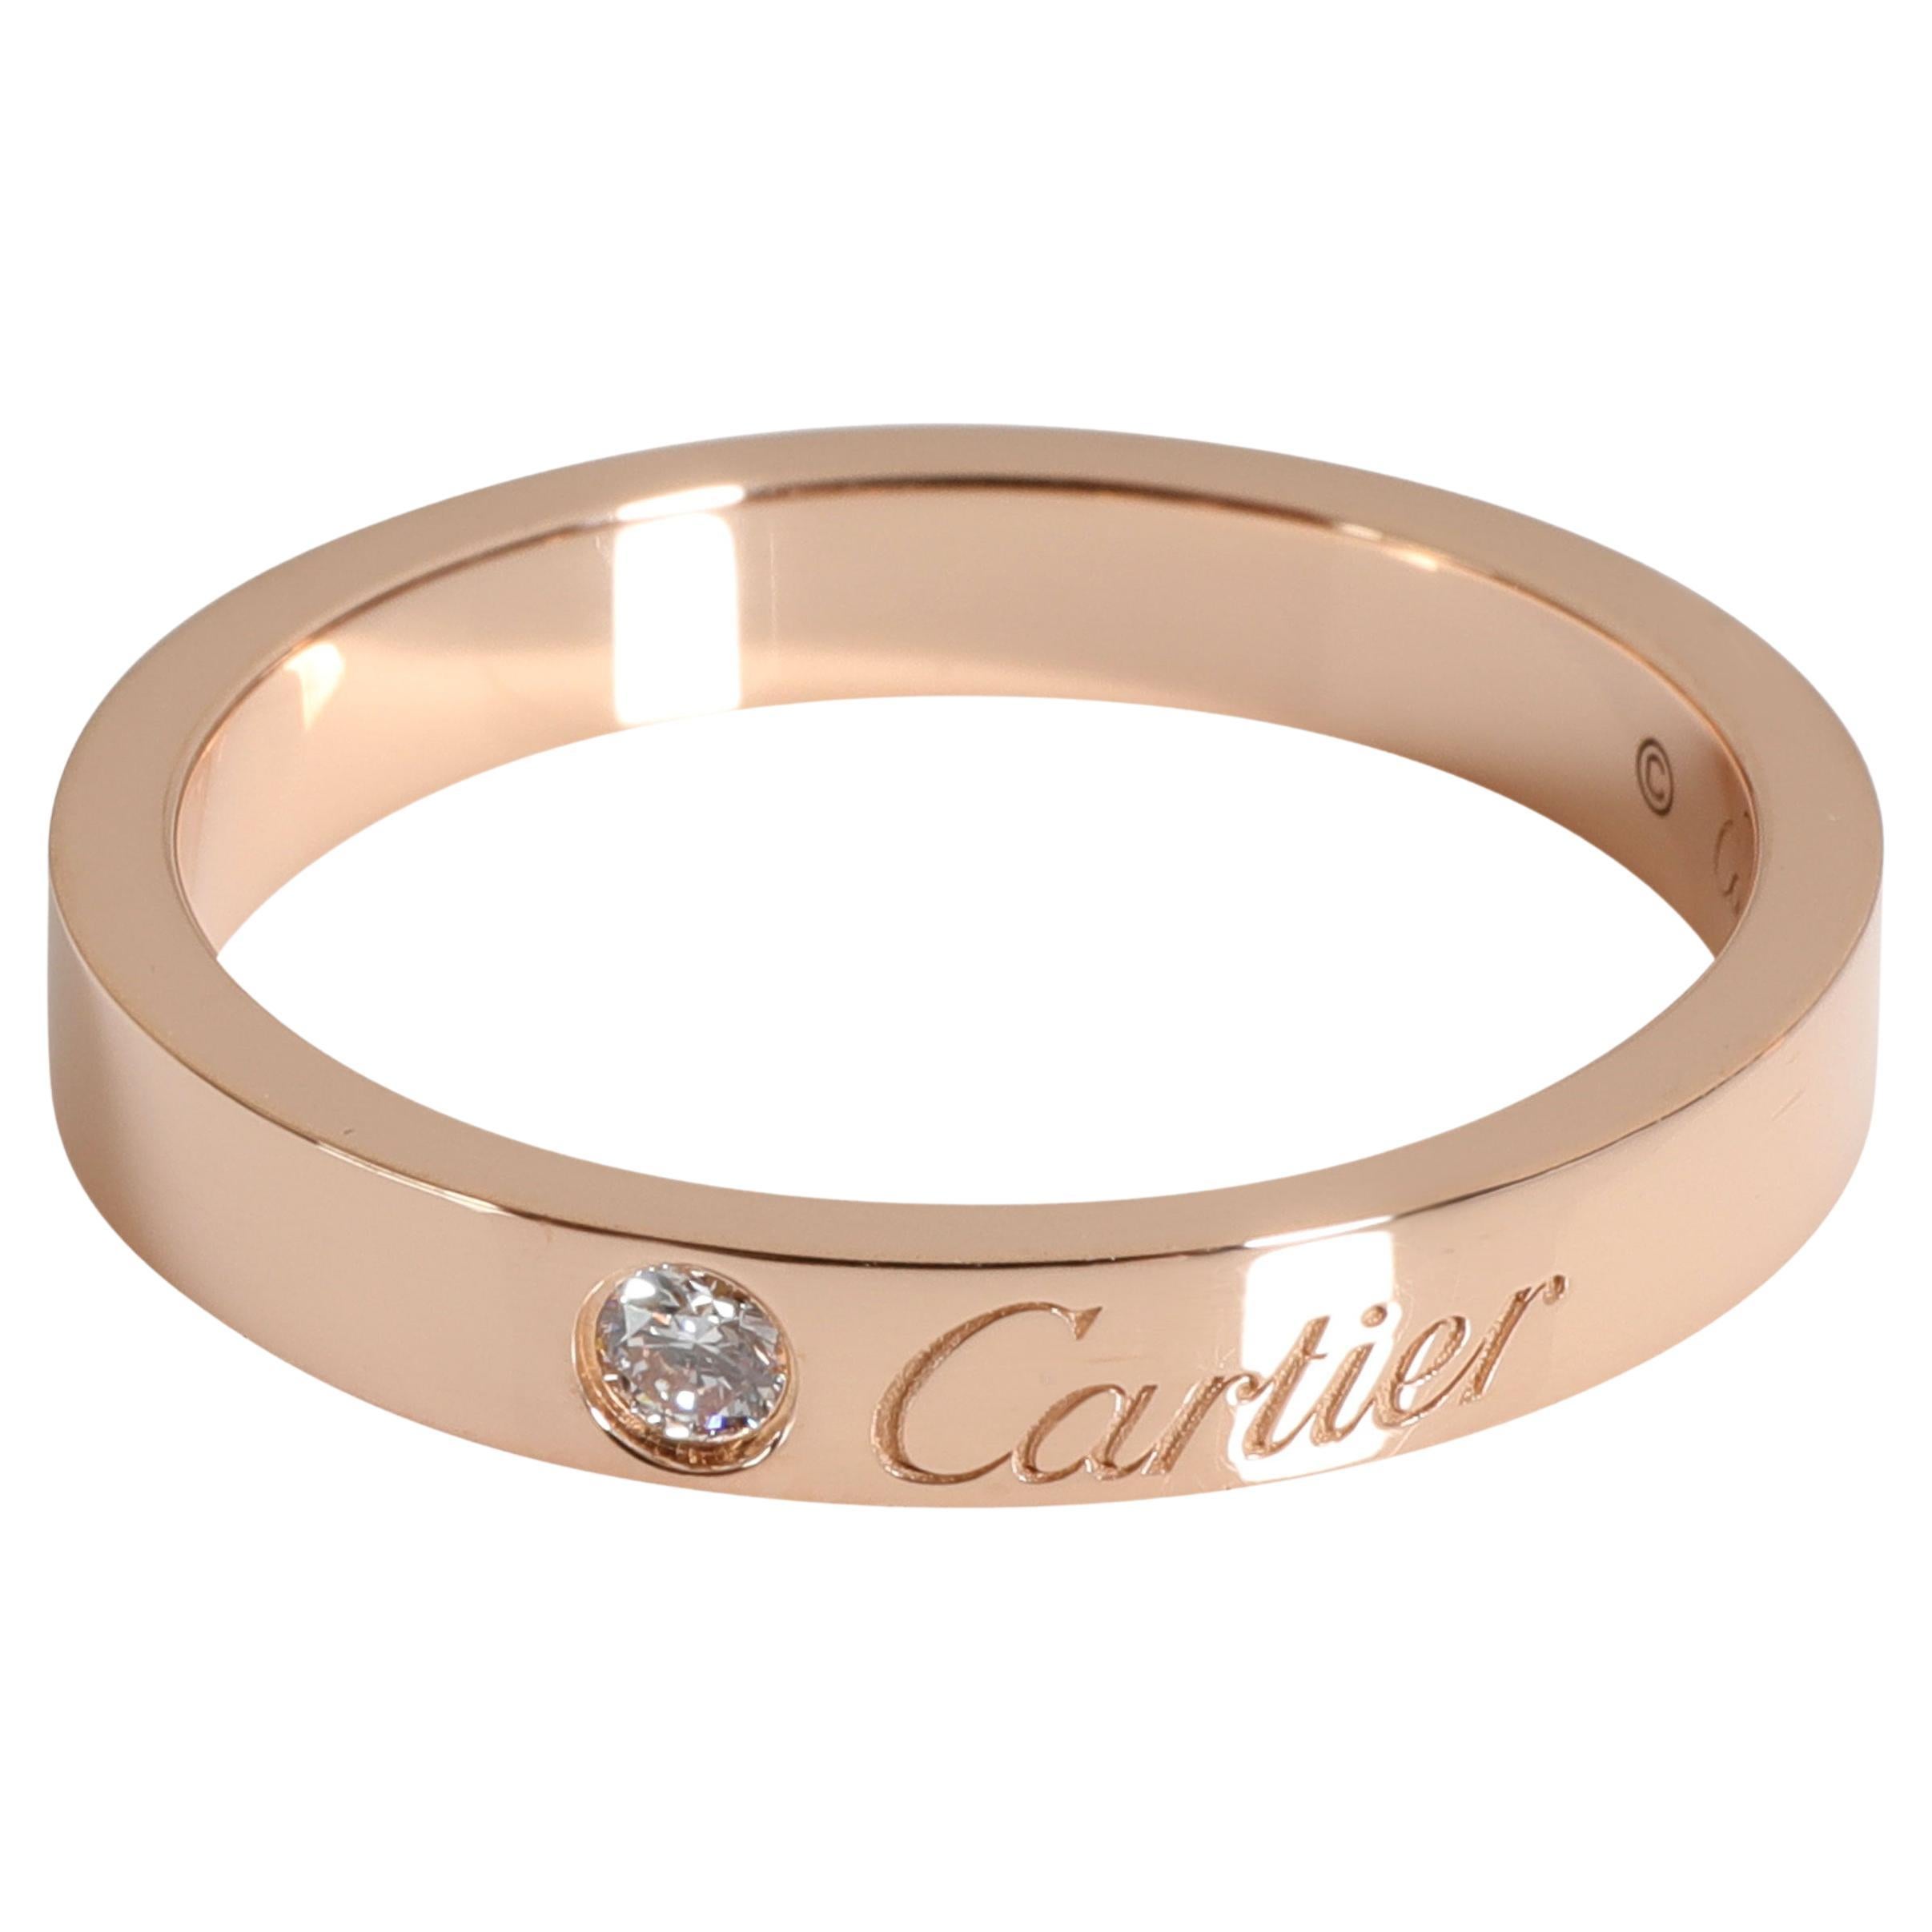 Cartier C De Cartier Diamond Wedding Band in 18k Rose Gold 0.03 CTW